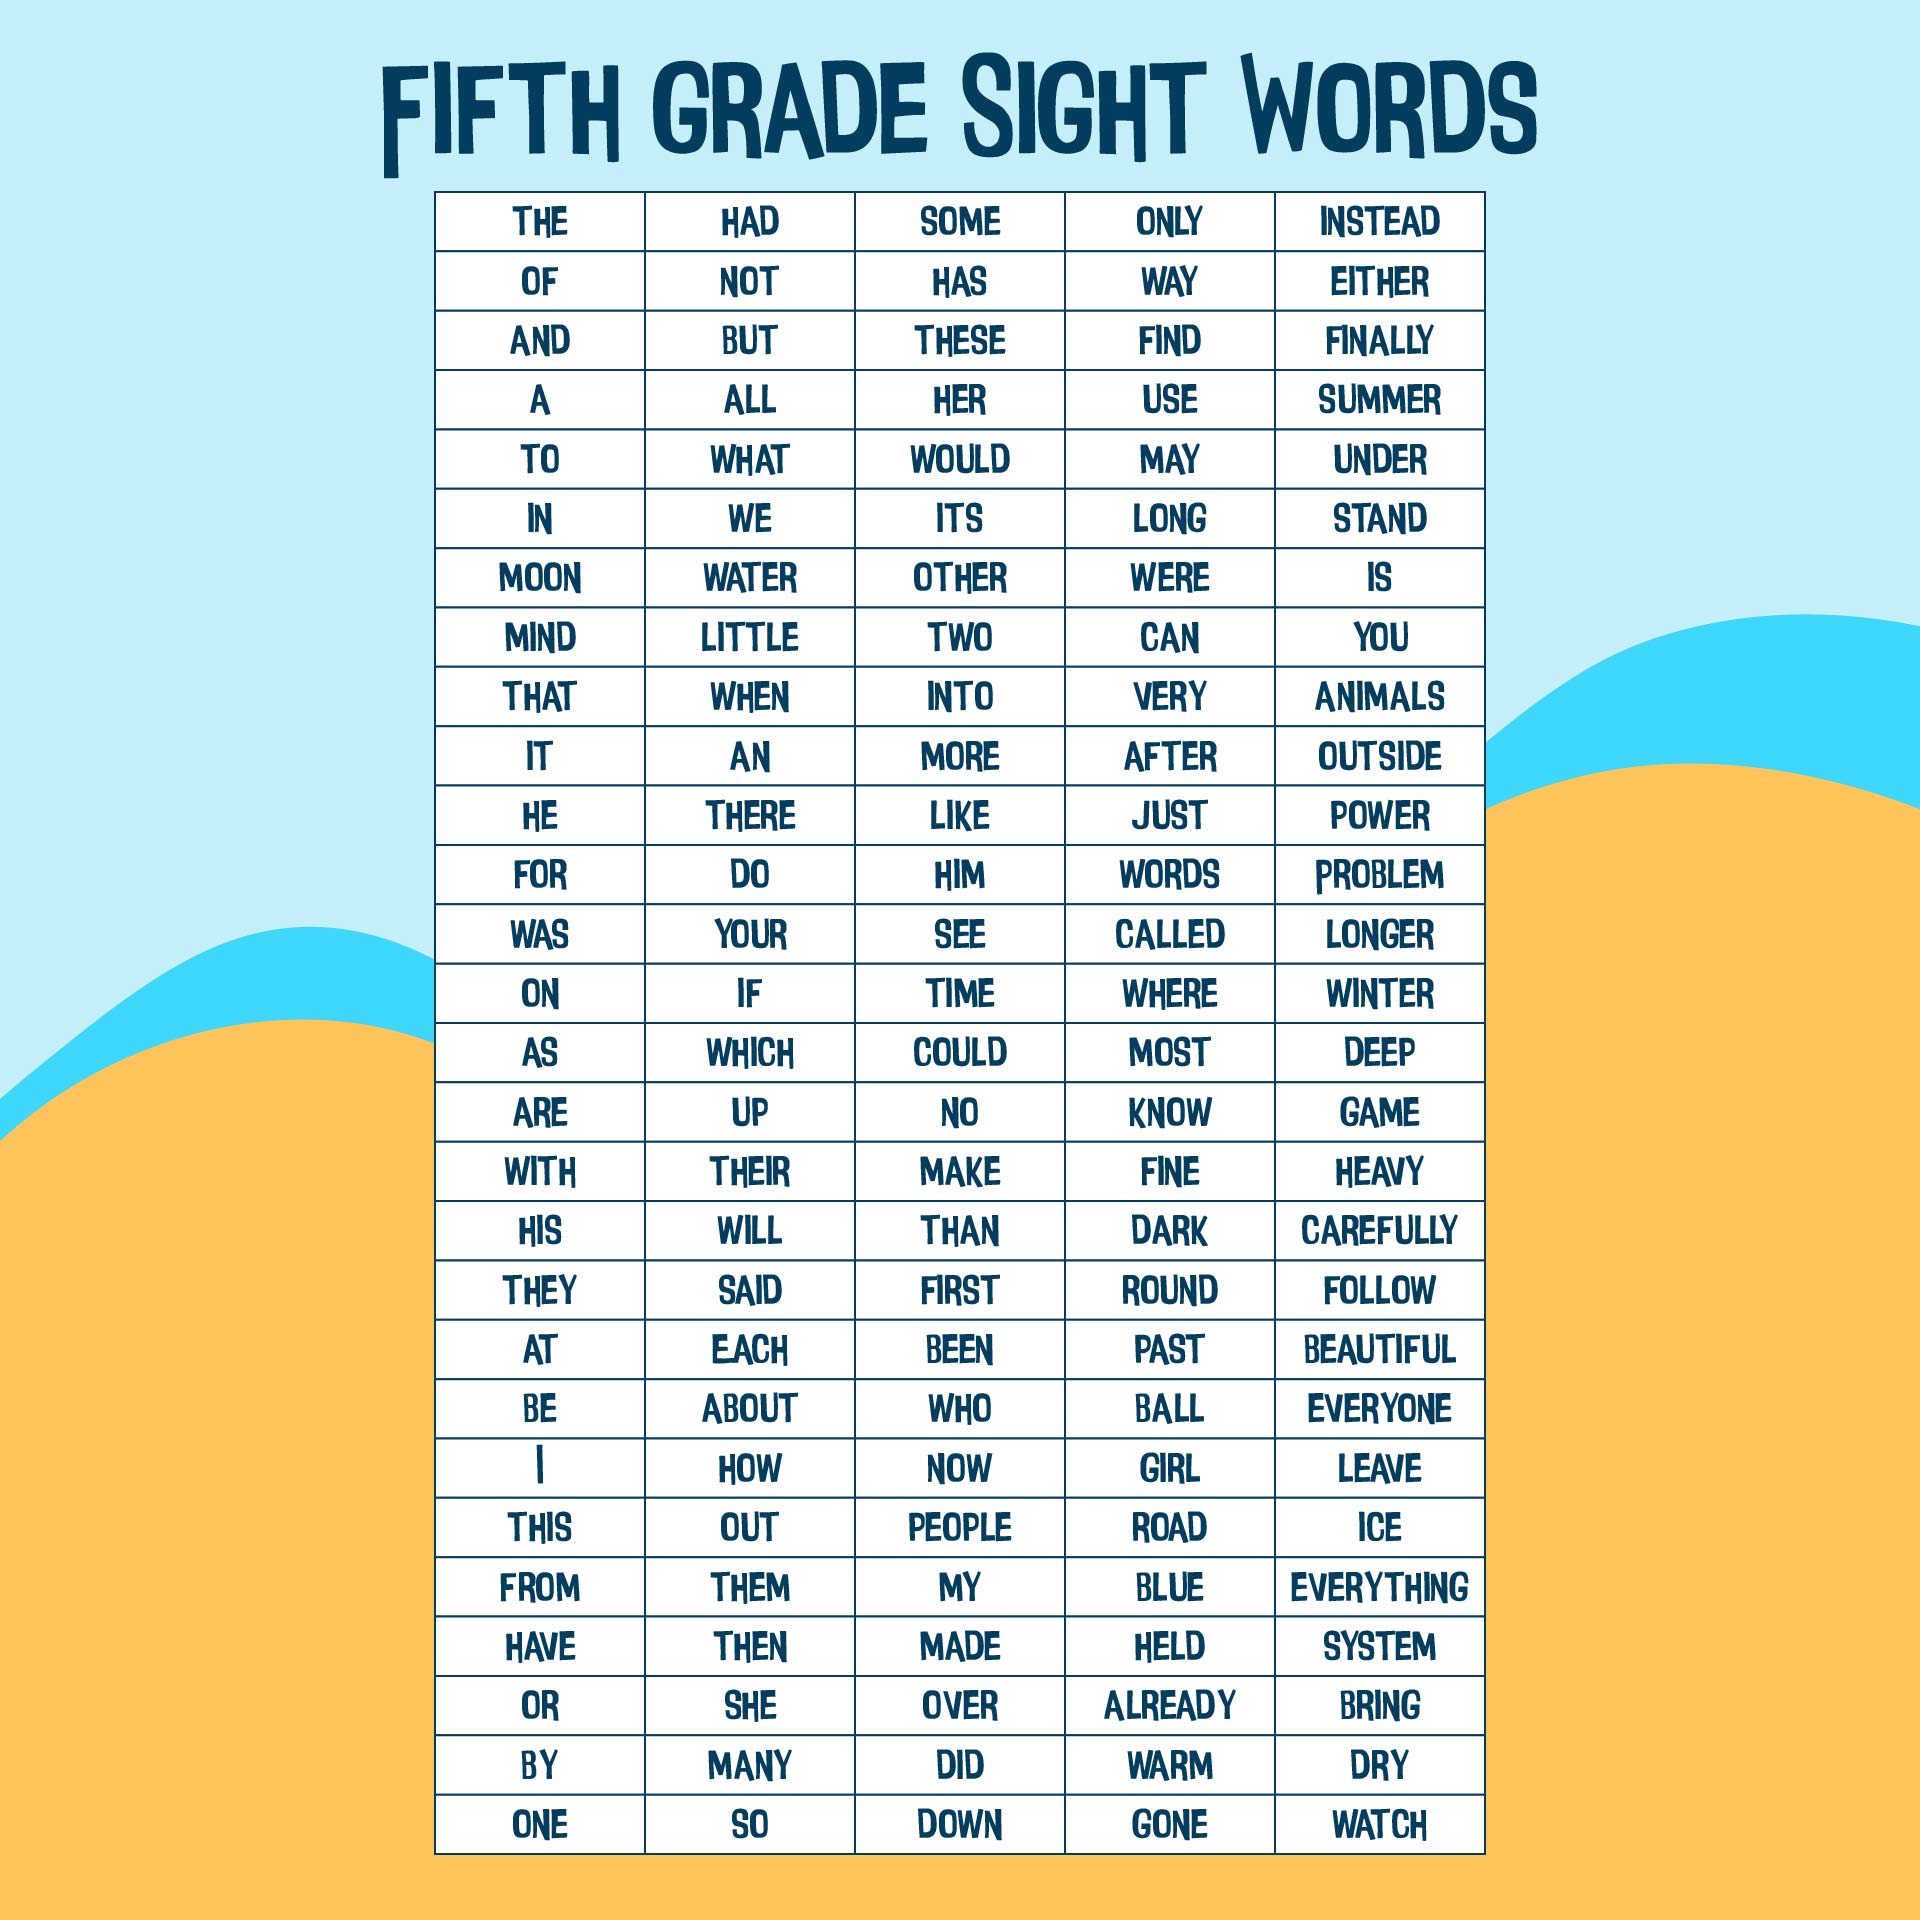 5th Grade Sight Word List